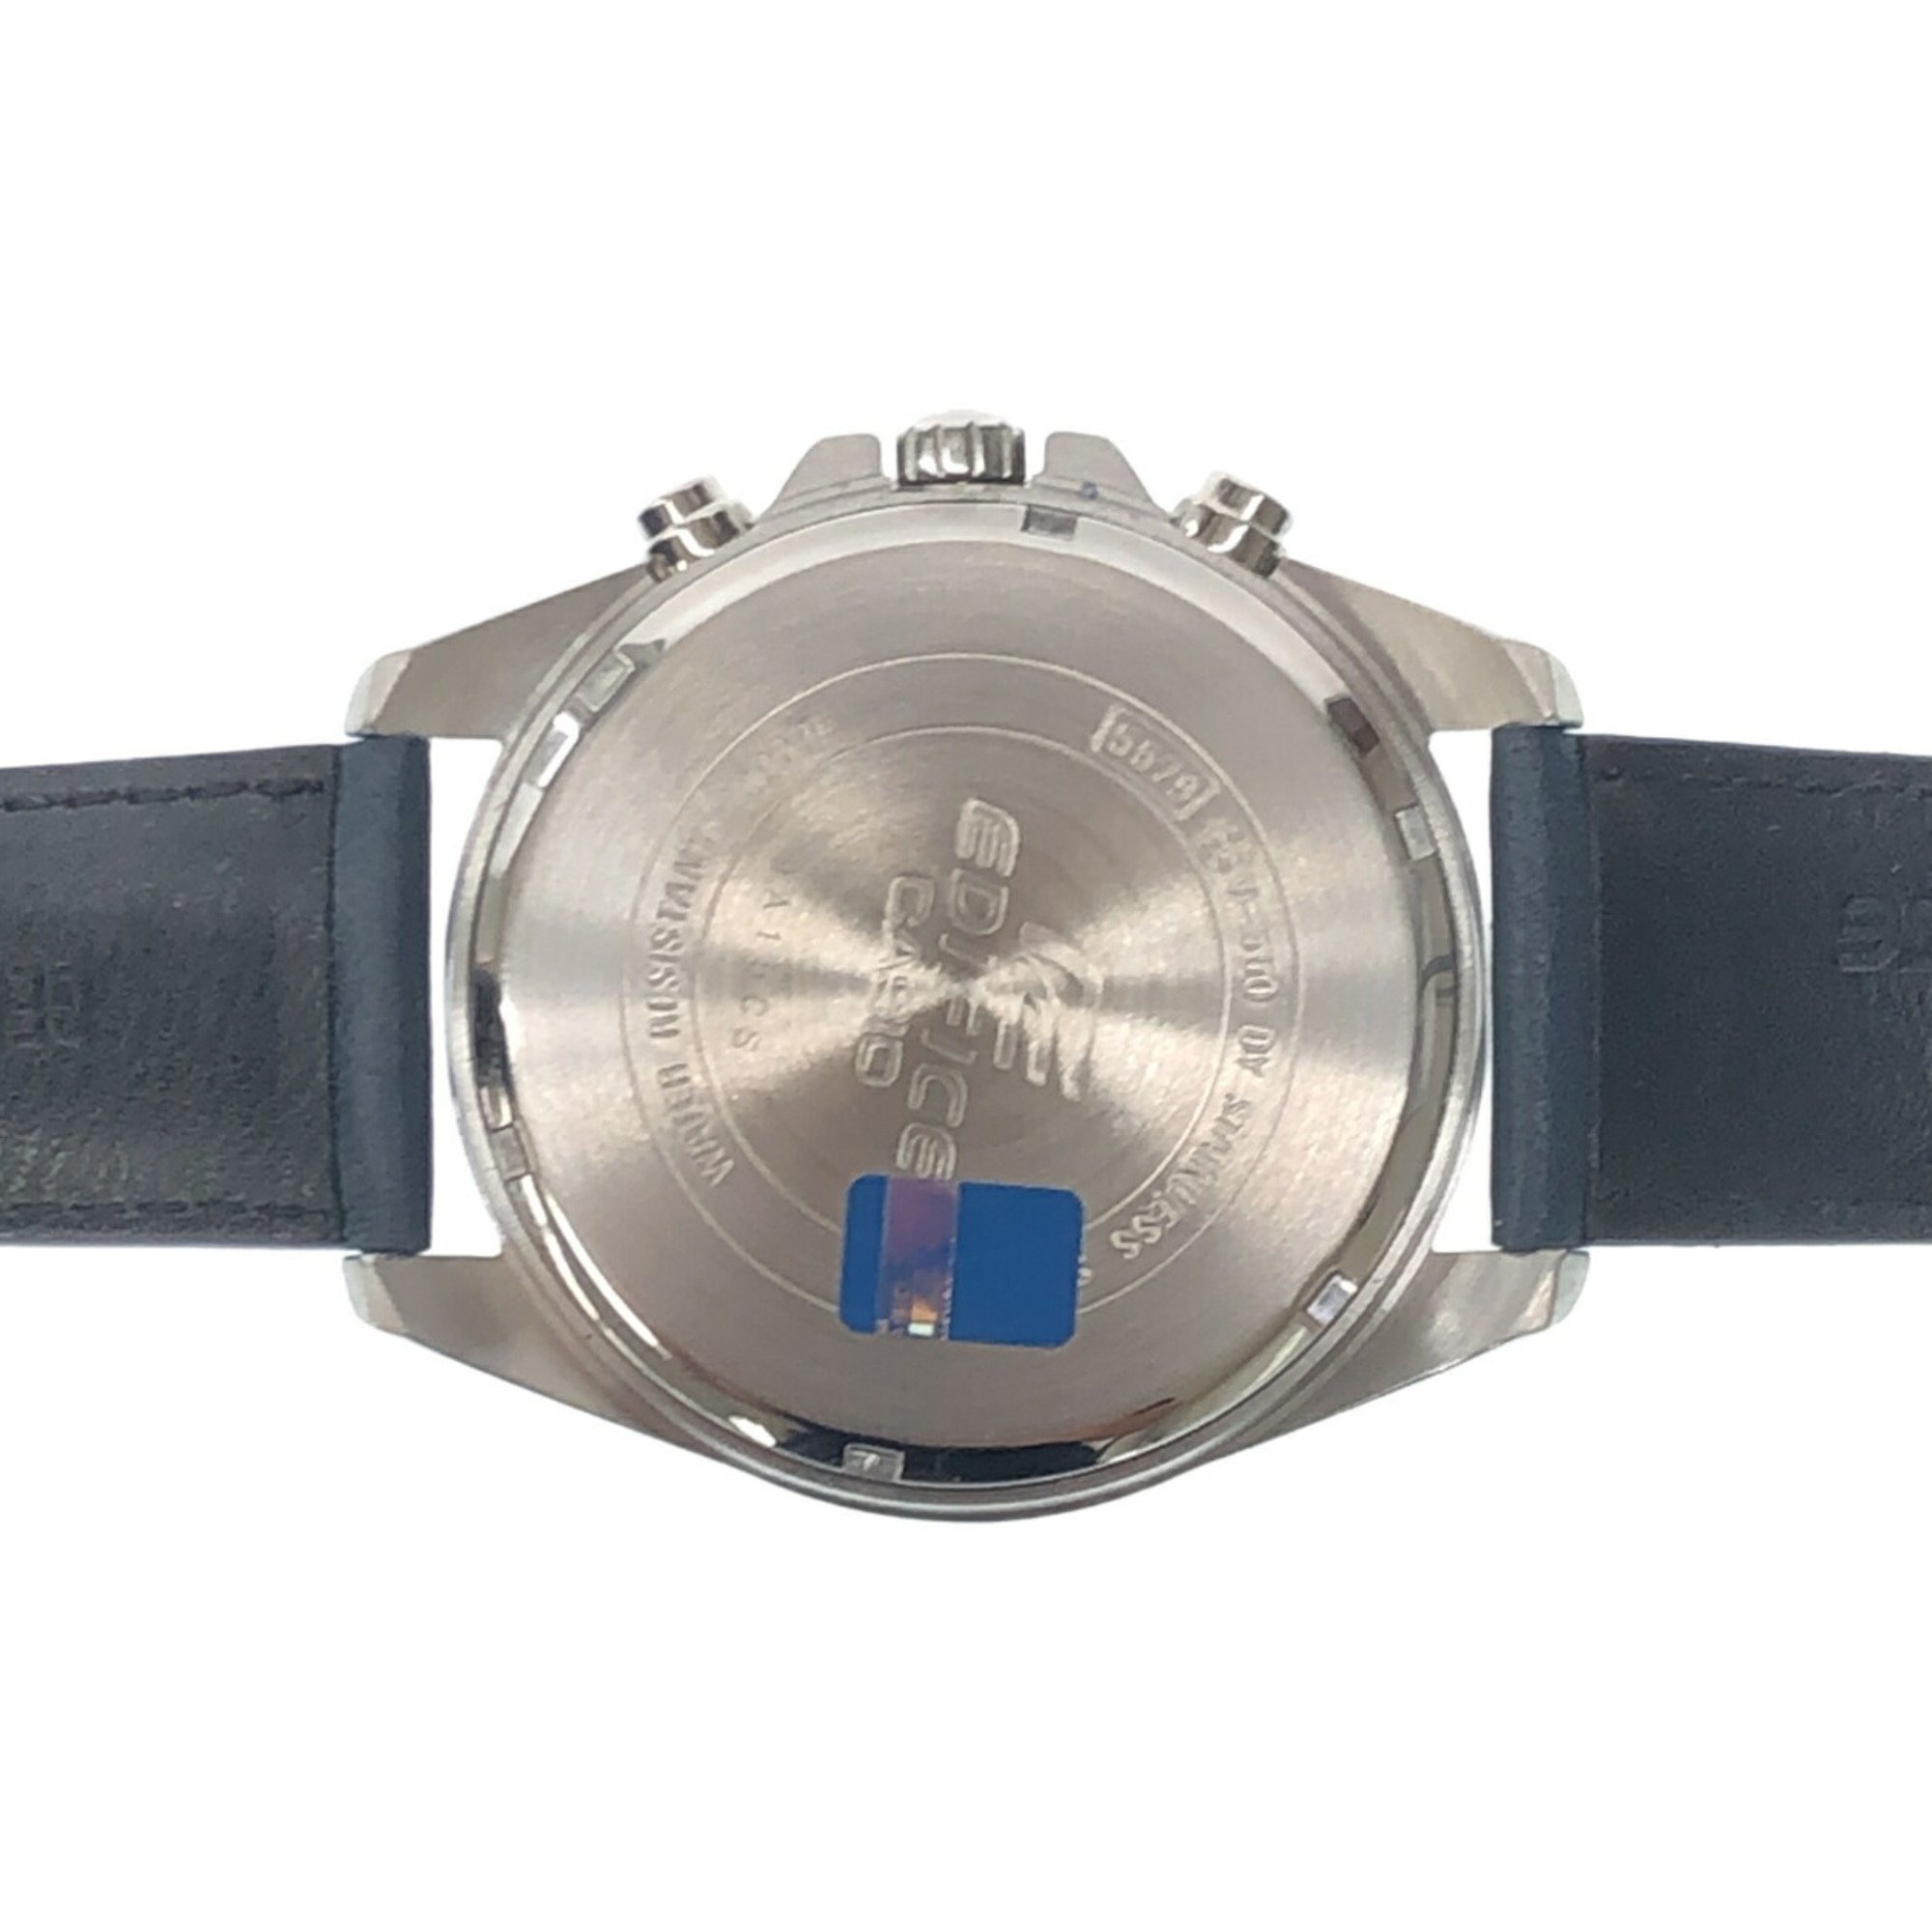 CASIO EDFICE Casio Edifice EEV-550L-2AVUDF Quartz Wristwatch WATCH Men's Watch Box Tag Instruction Manual Included Mikunigaoka Store IT8T28URRZ8K RM3802M